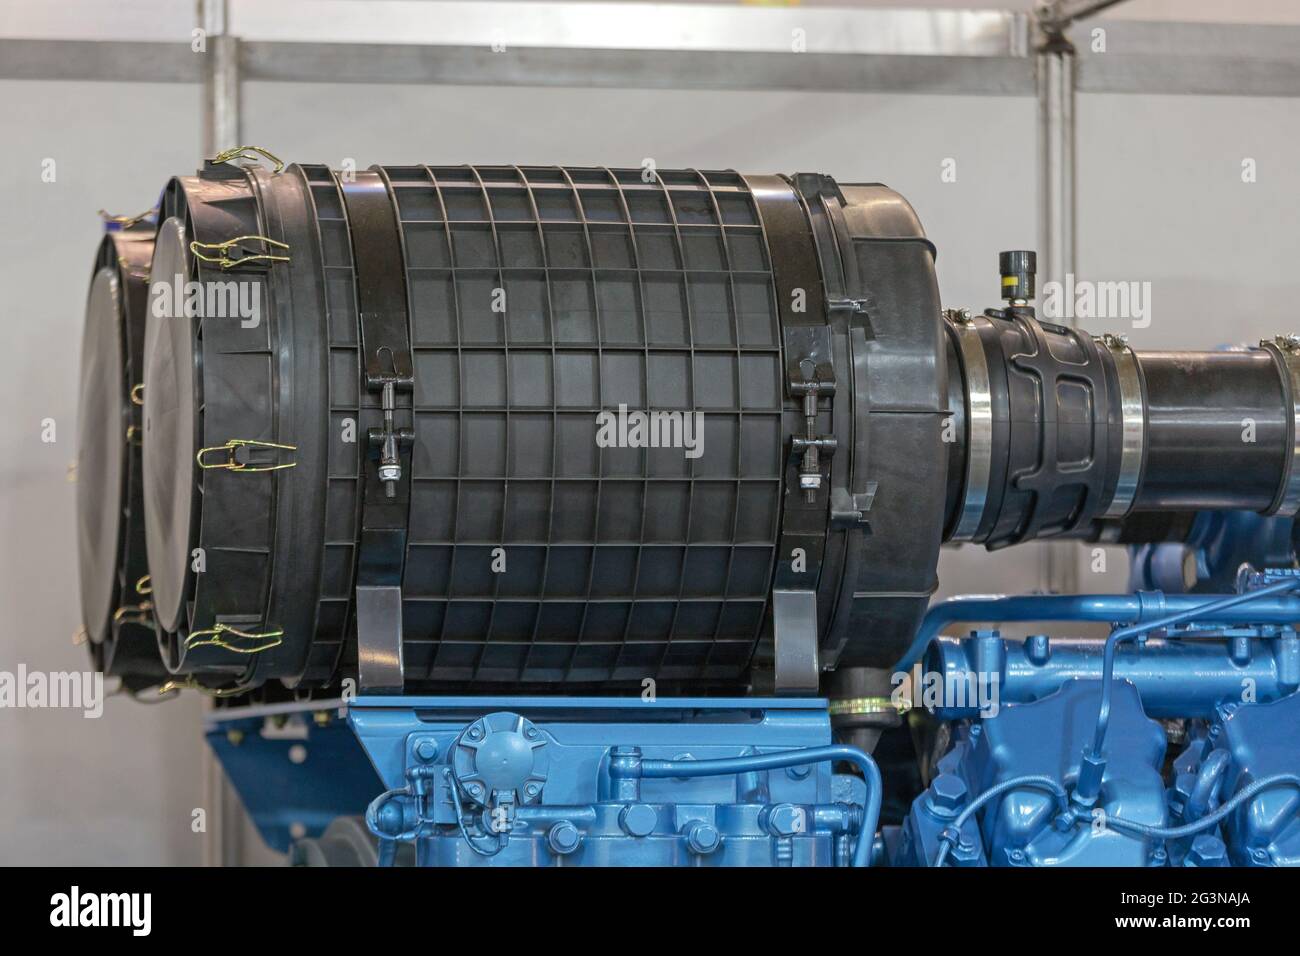 Big Air Filter Box at Top of Power Generator Diesel Engine Stock Photo -  Alamy